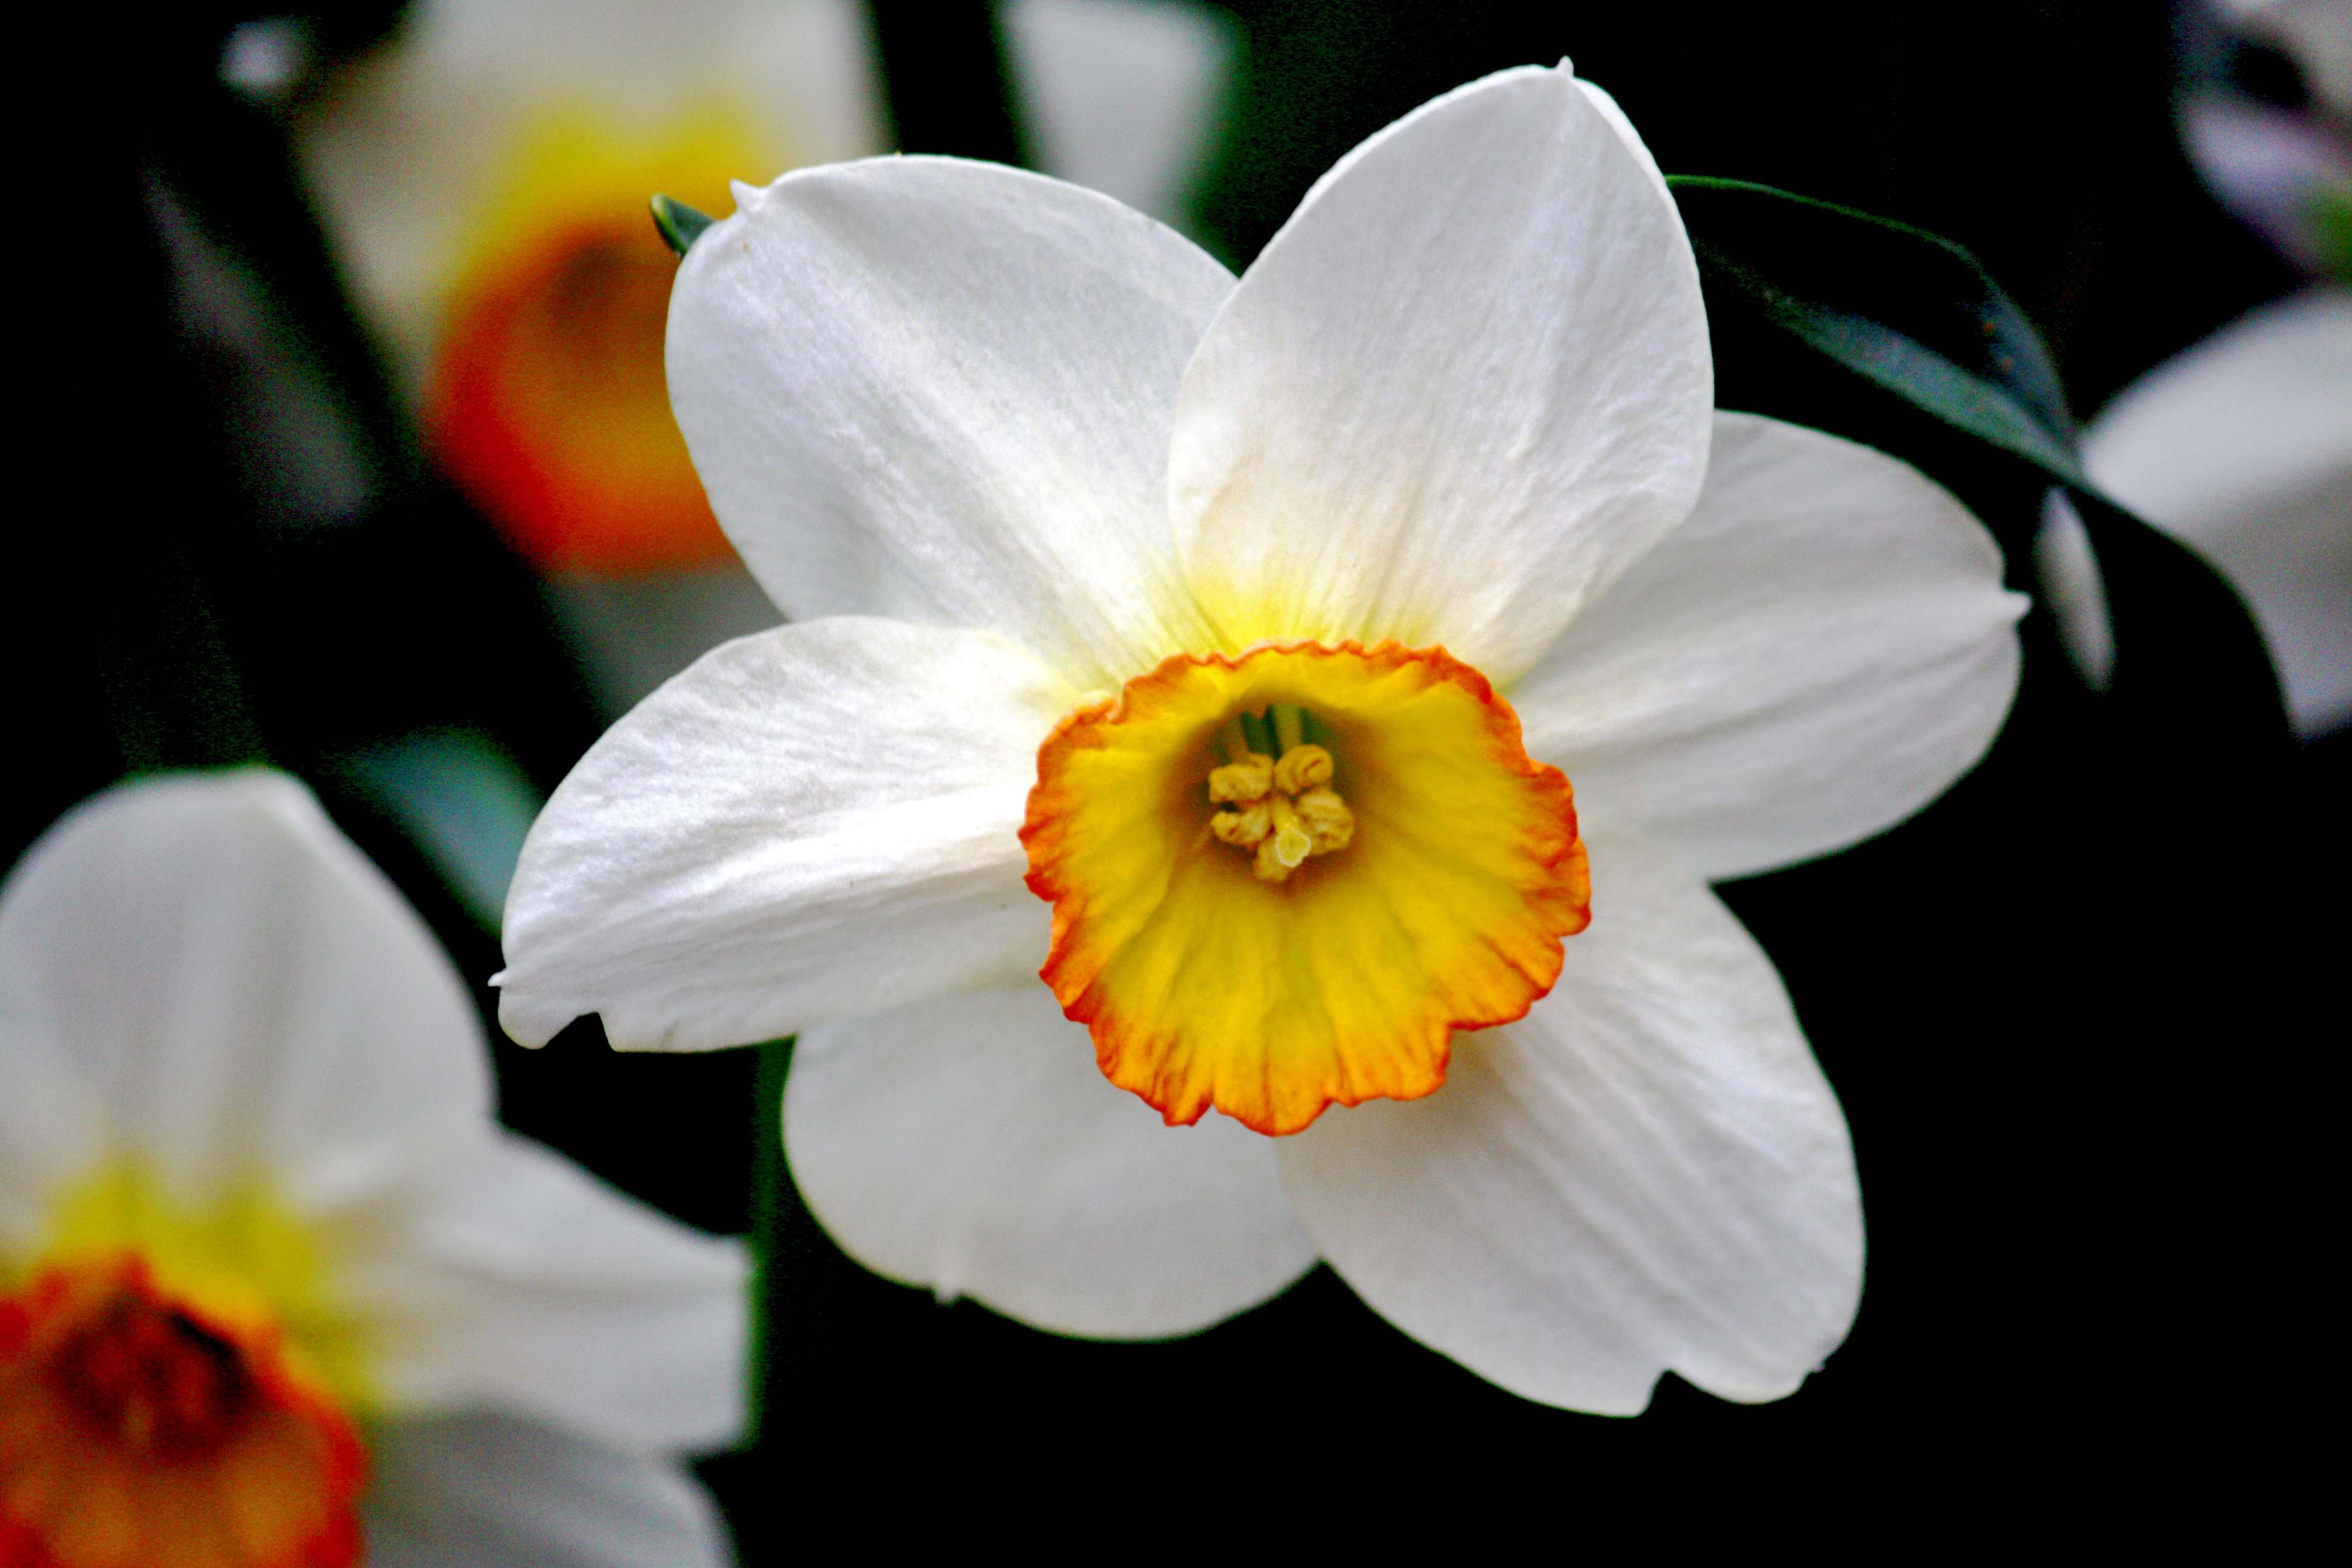 Название цветка нарцисс. Нарцисс Erlicheer. Нарцисс Гелиос. Нарцисс (растение). Нарцисс мелкокорончатый Barrett Browning.